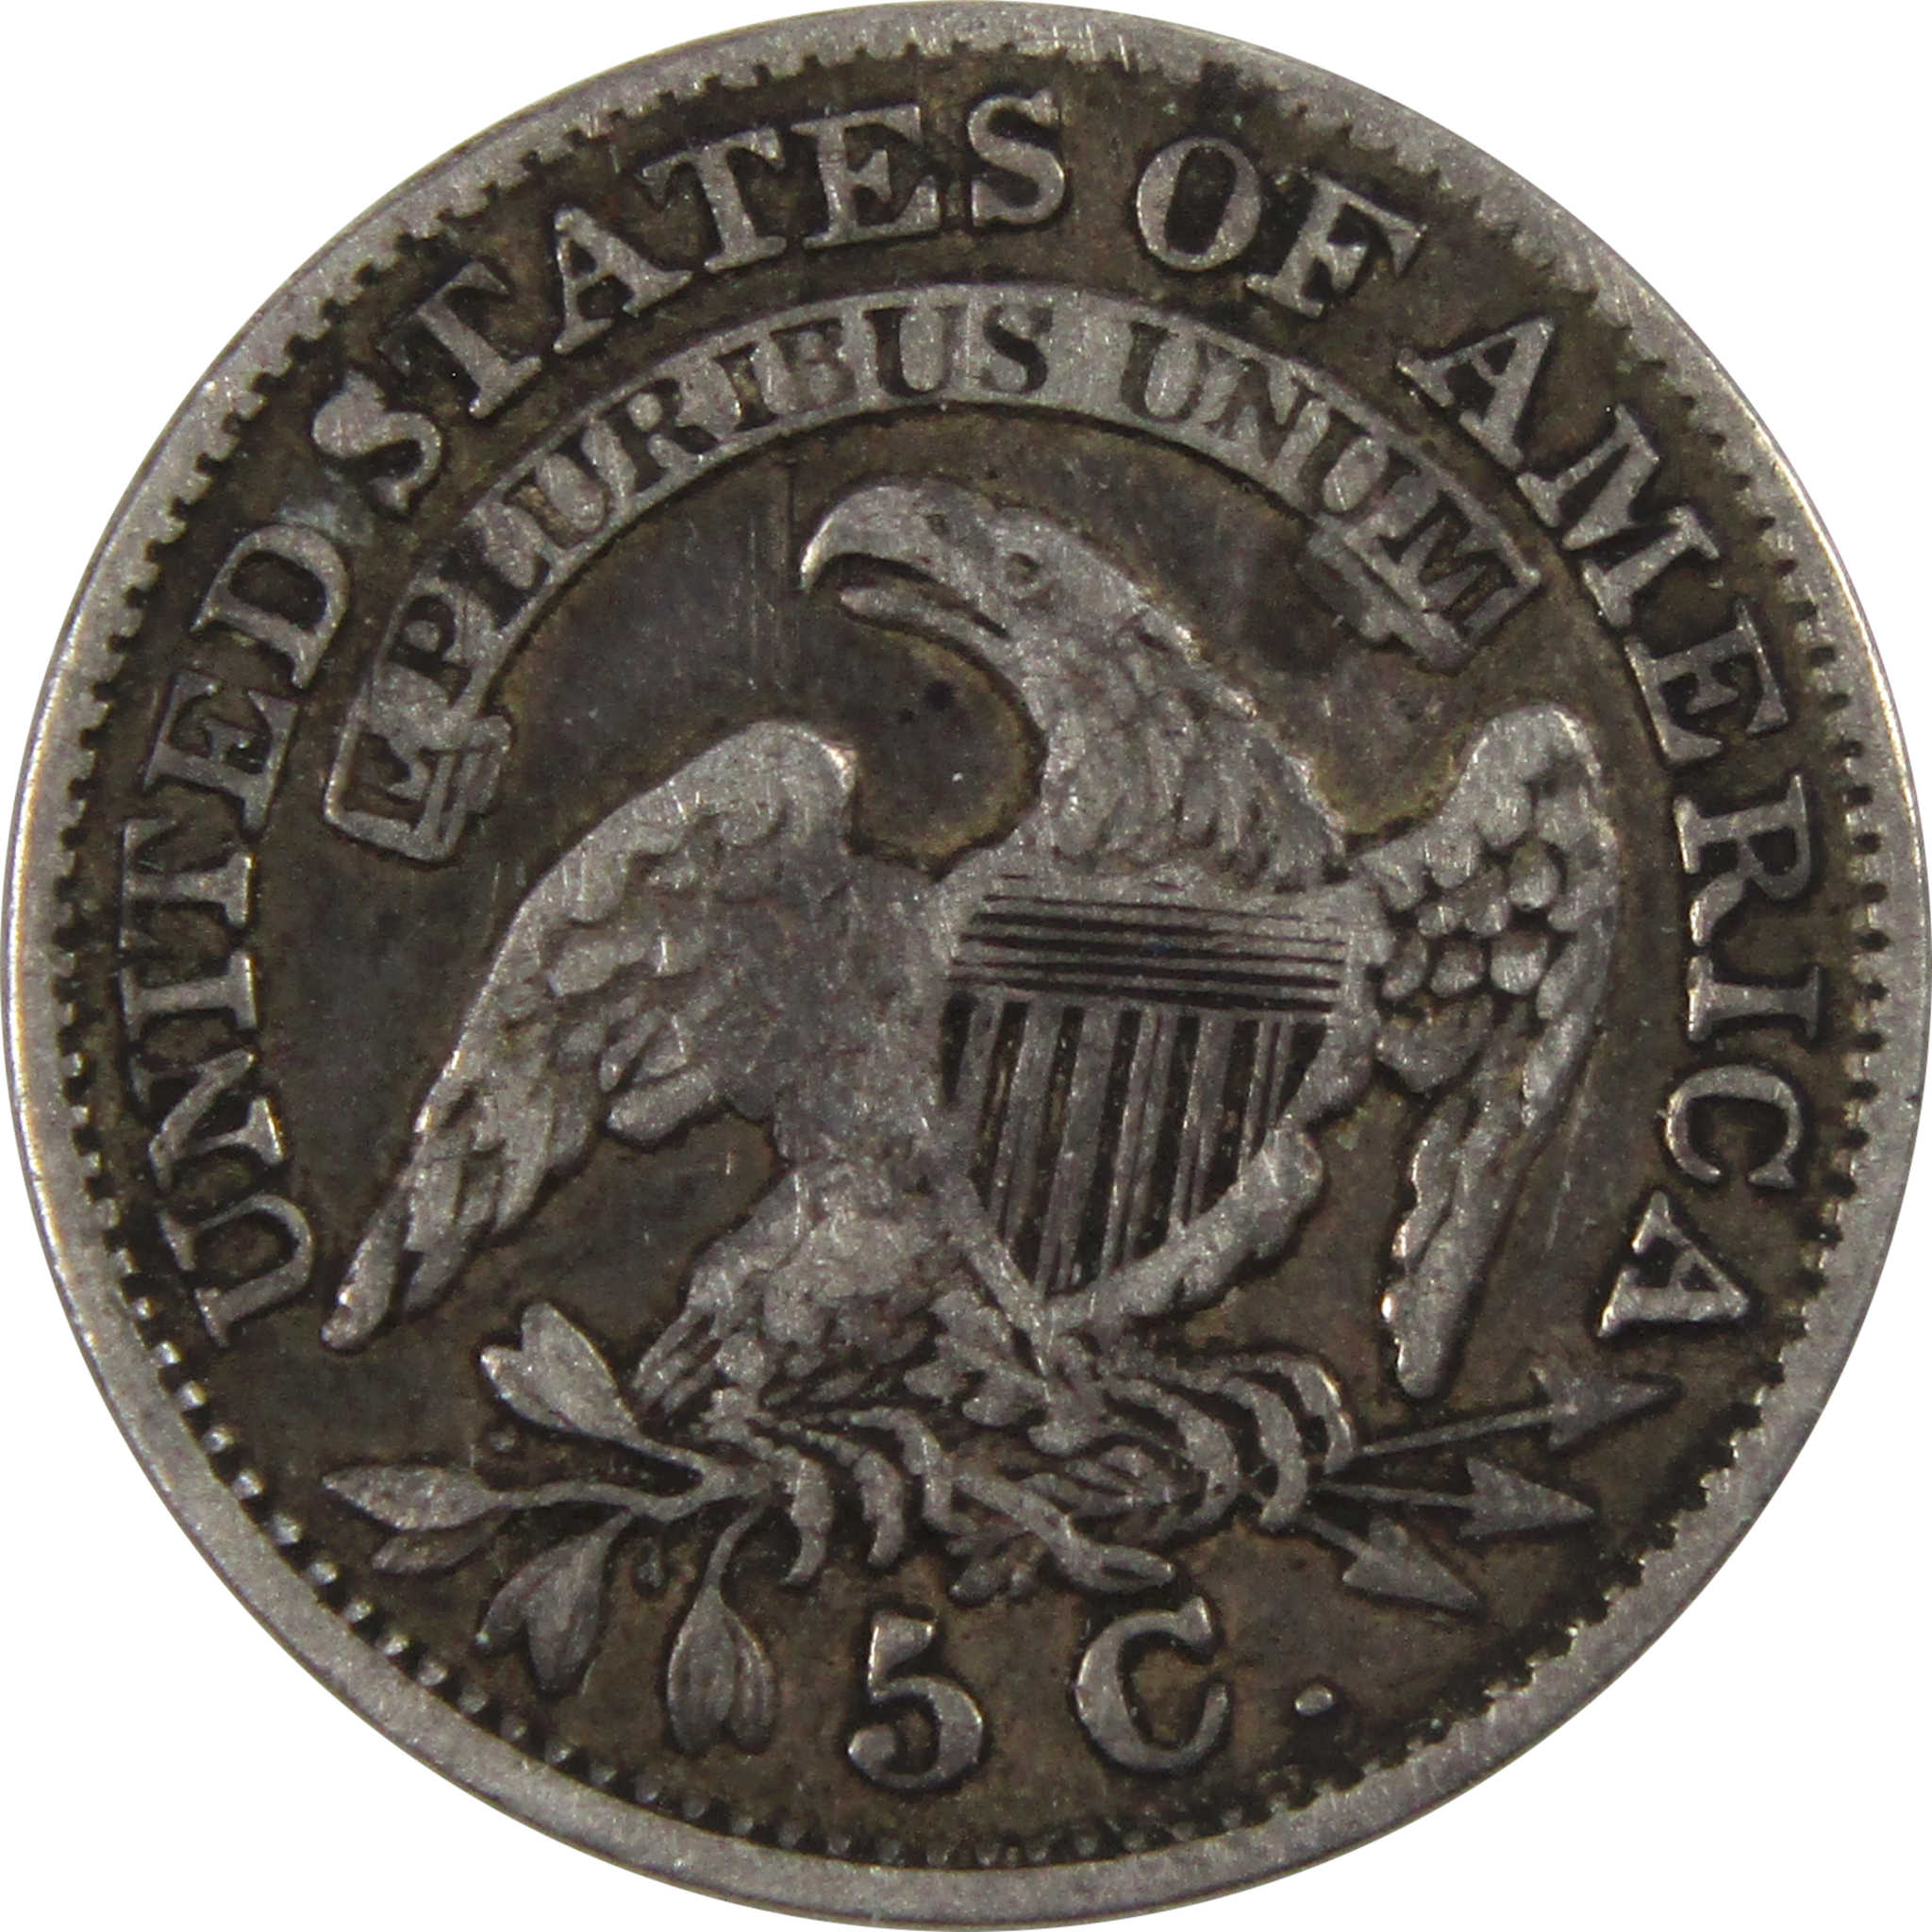 1832 Capped Bust Half Dime VF Very Fine 89.24% Silver Coin SKU:I4455